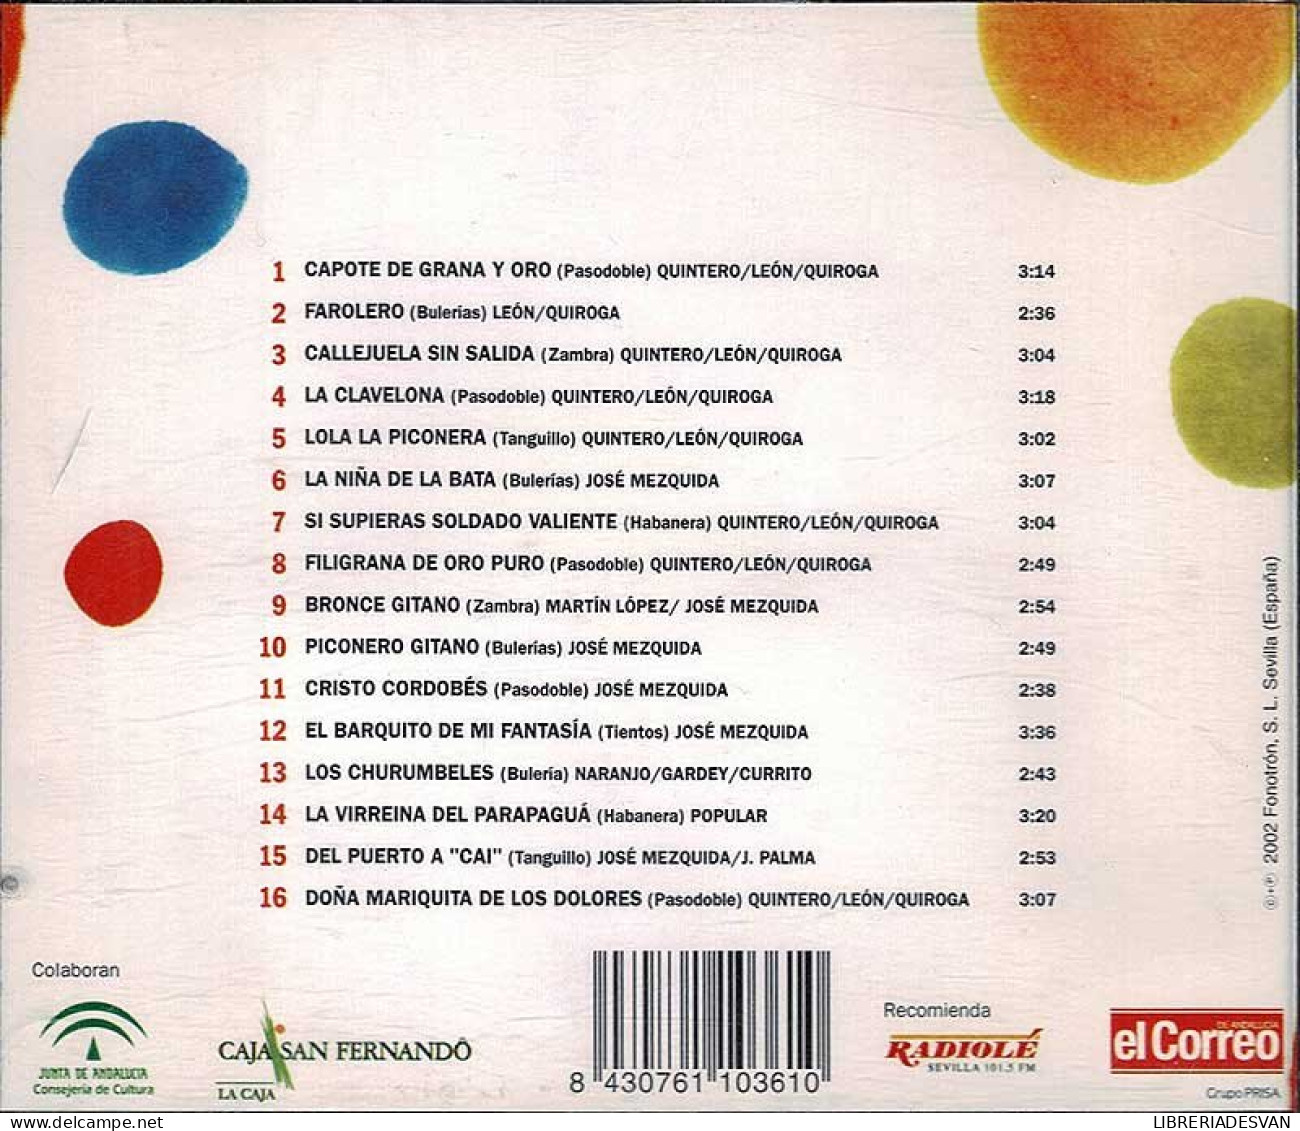 Juanita Reina - Grandes De La Copla. CD - Autres - Musique Espagnole